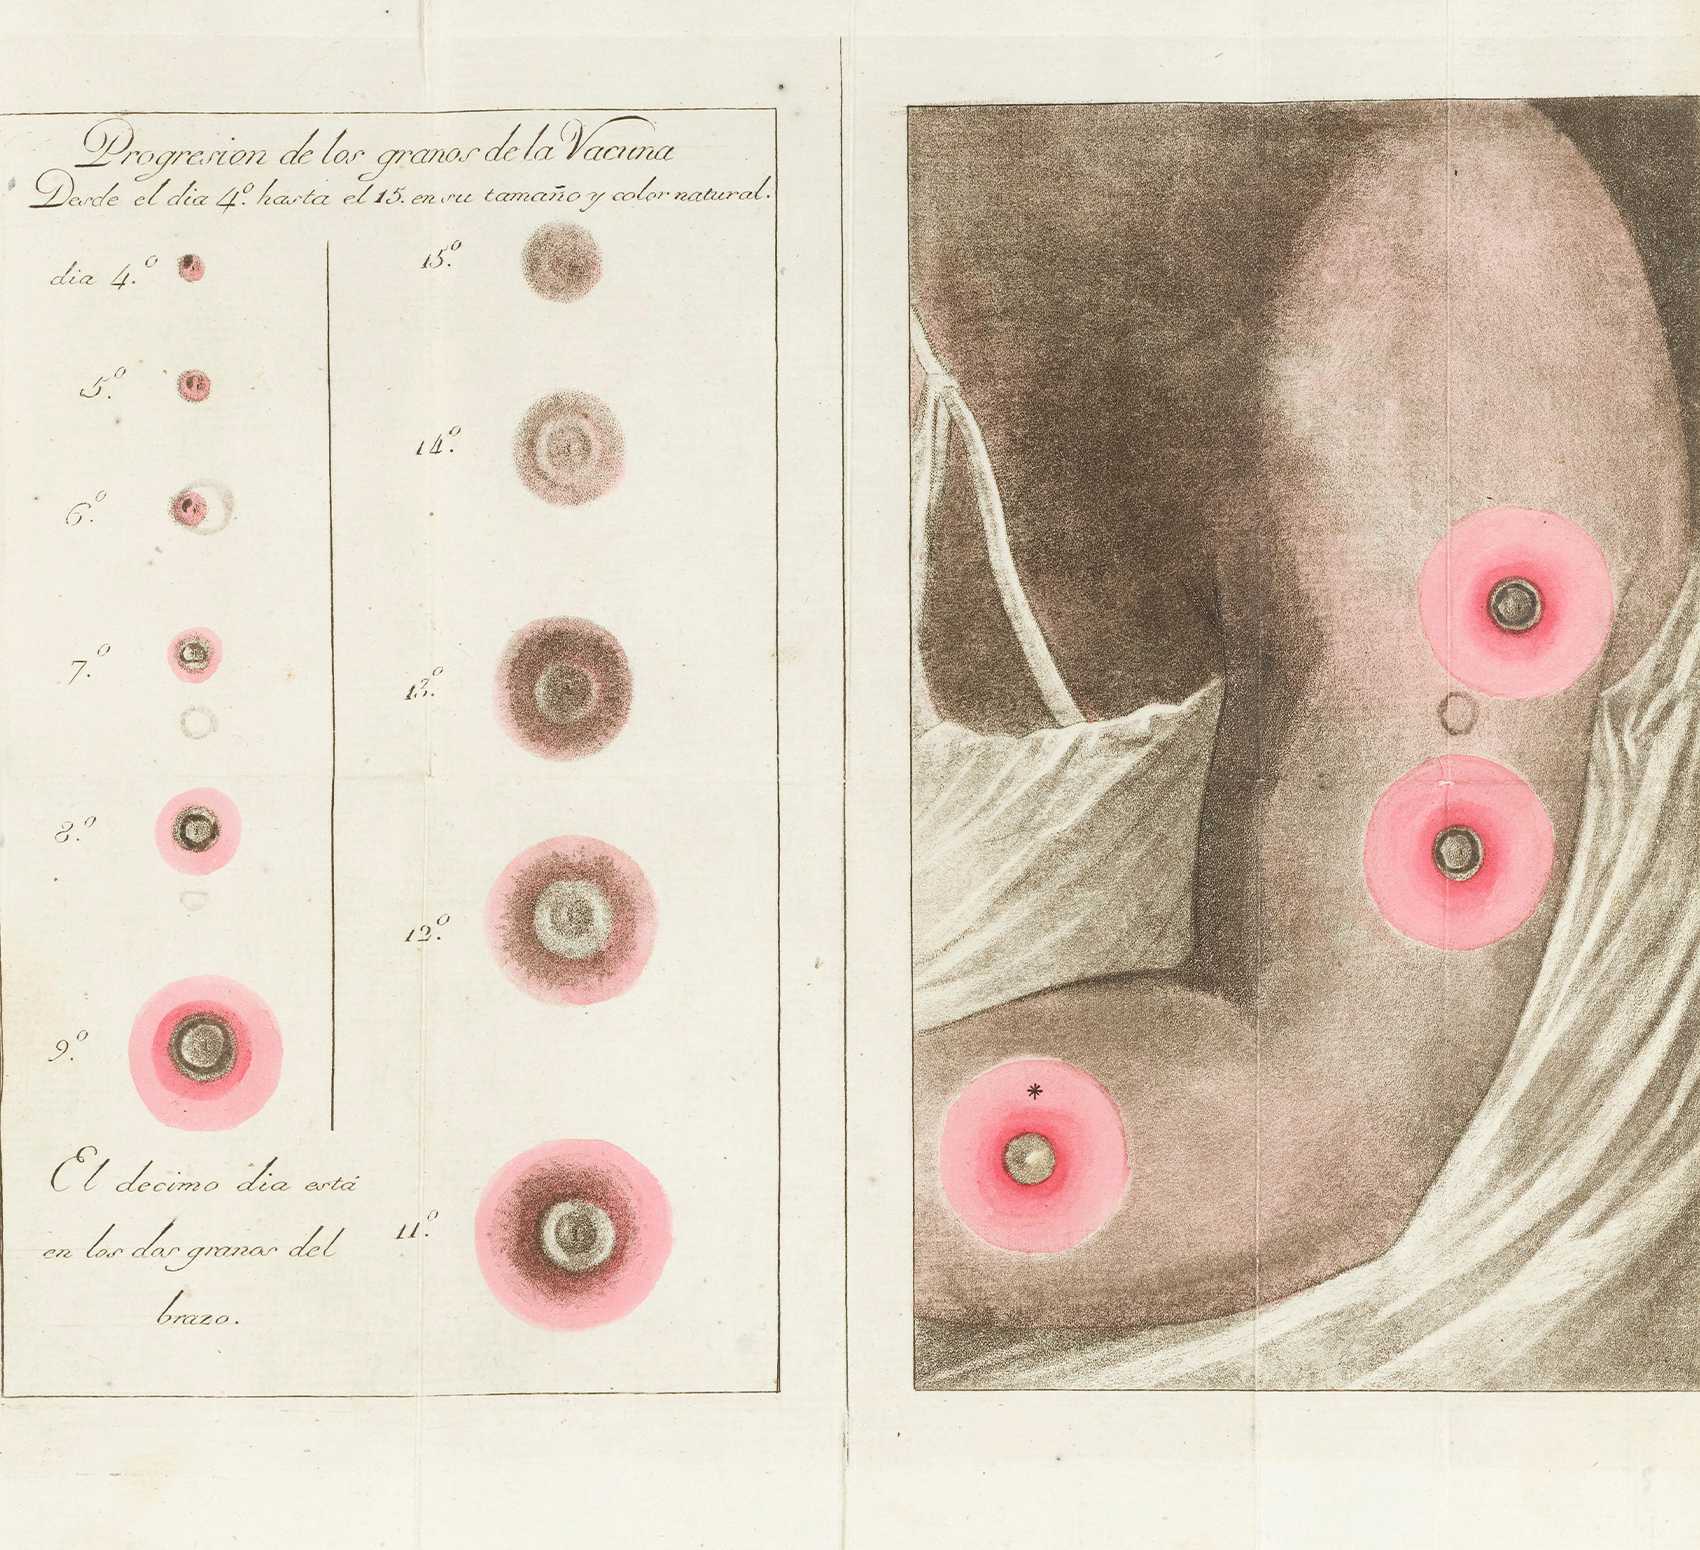 Illustration of smallpox vaccination scars